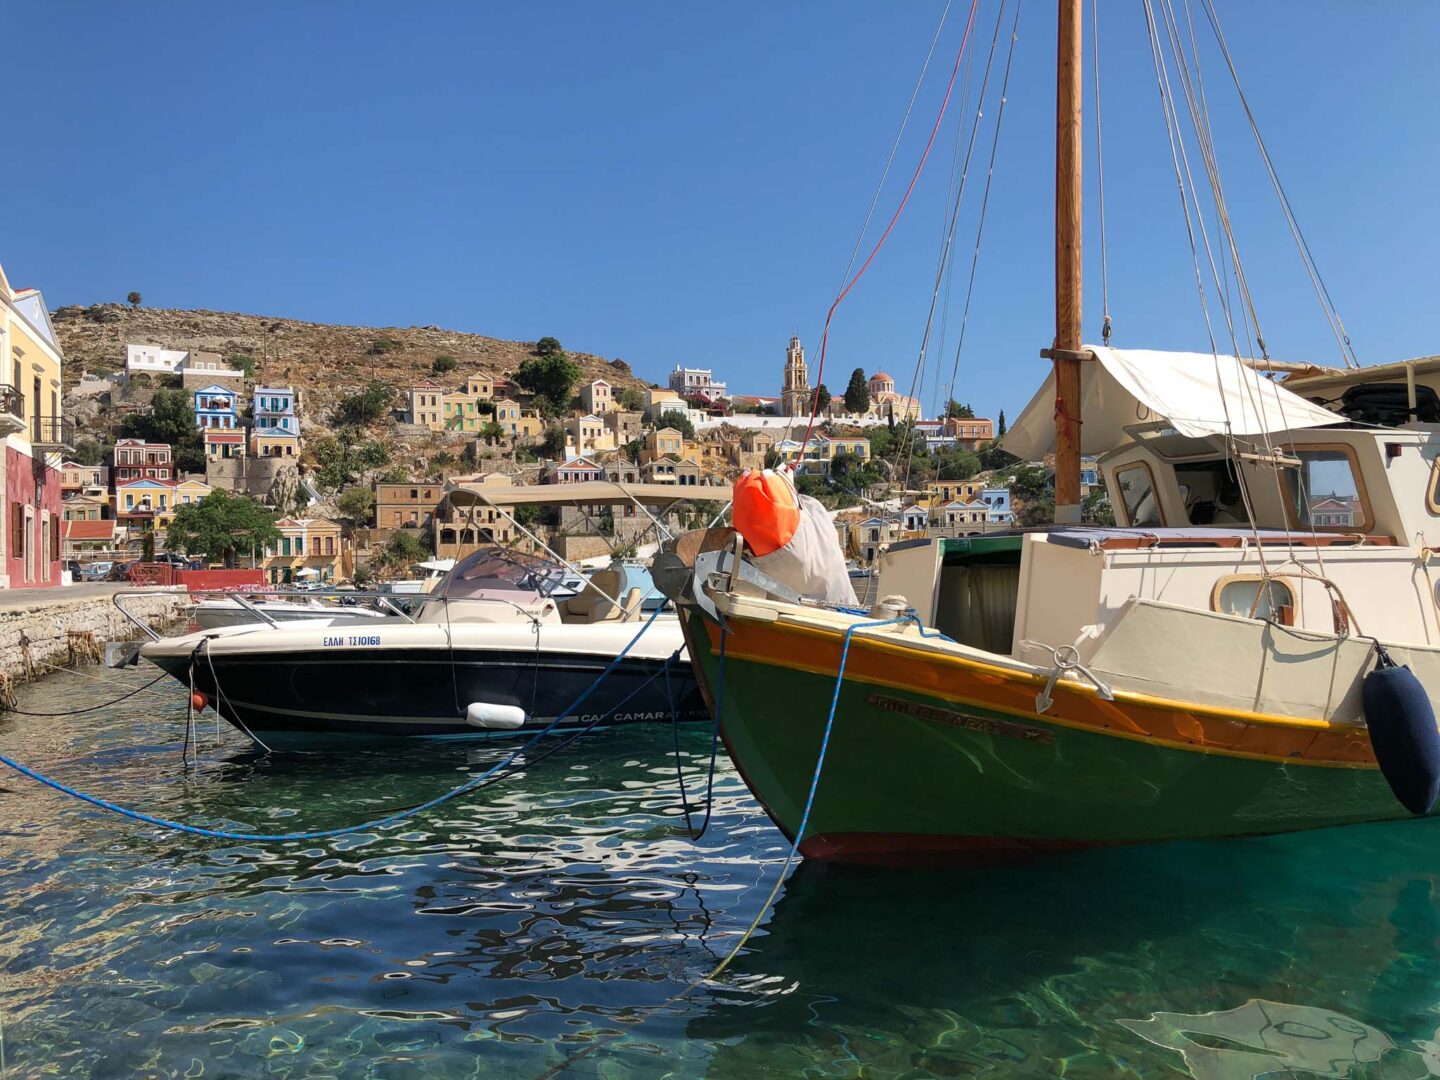 Symi Greece boats on the quay